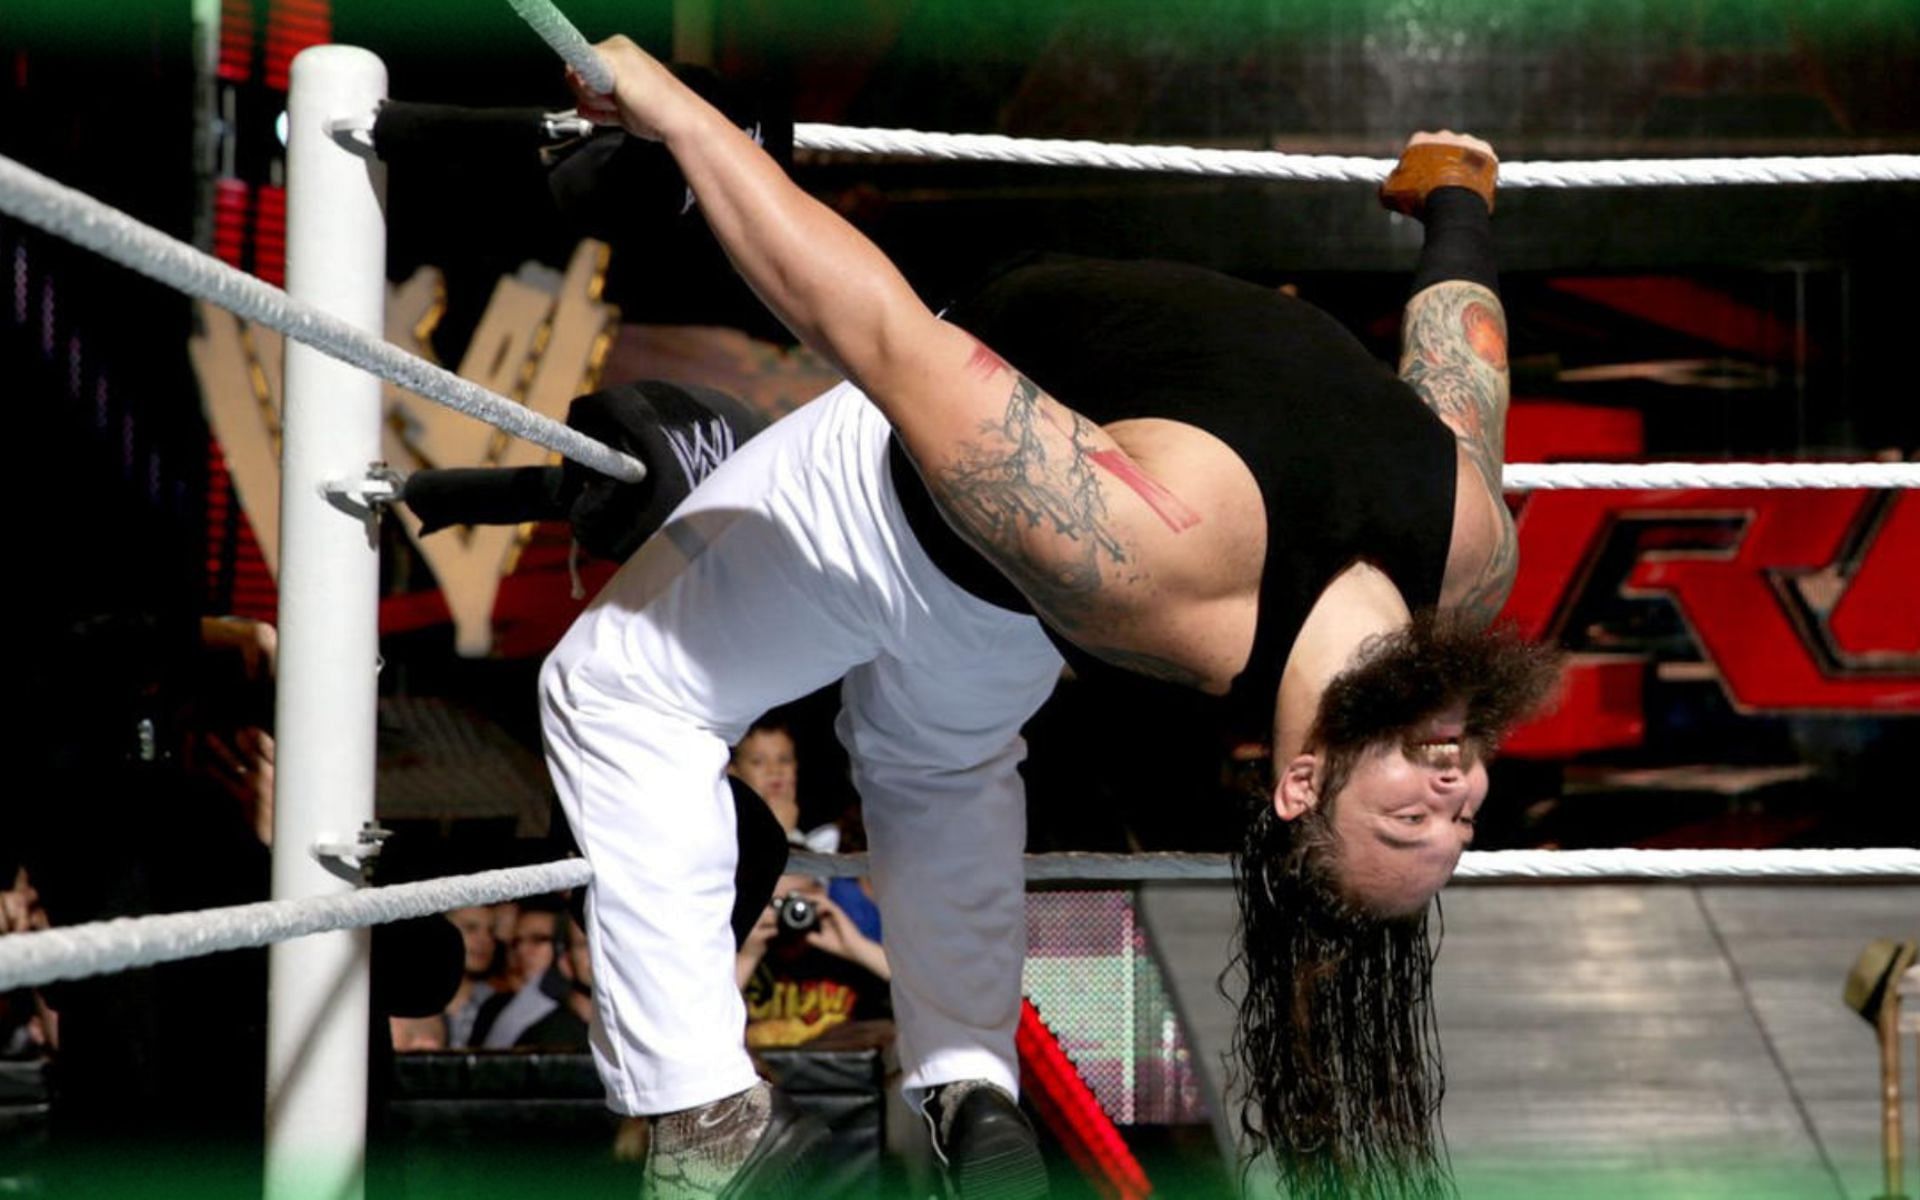 Former WWE Superstar, Bray Wyatt